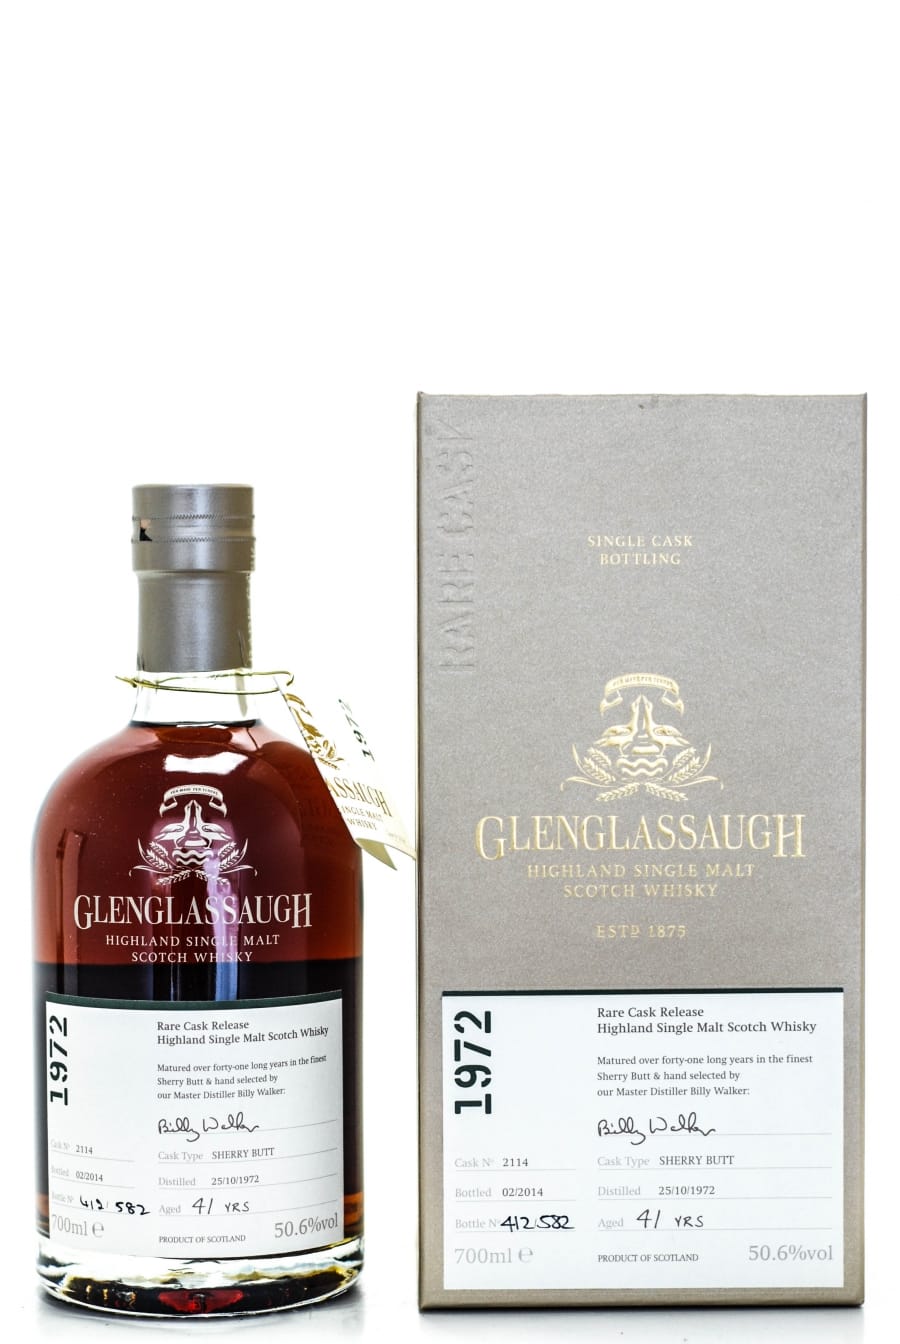 Glenglassaugh - Glenglassaugh 41 yo Rare Cask Release Batch 1 cask 2114 Refill Sherry Butt (50.6%, OB, Distilled: 25.10.1972 bottled 02.2014) 1 of 582 bottles 1972